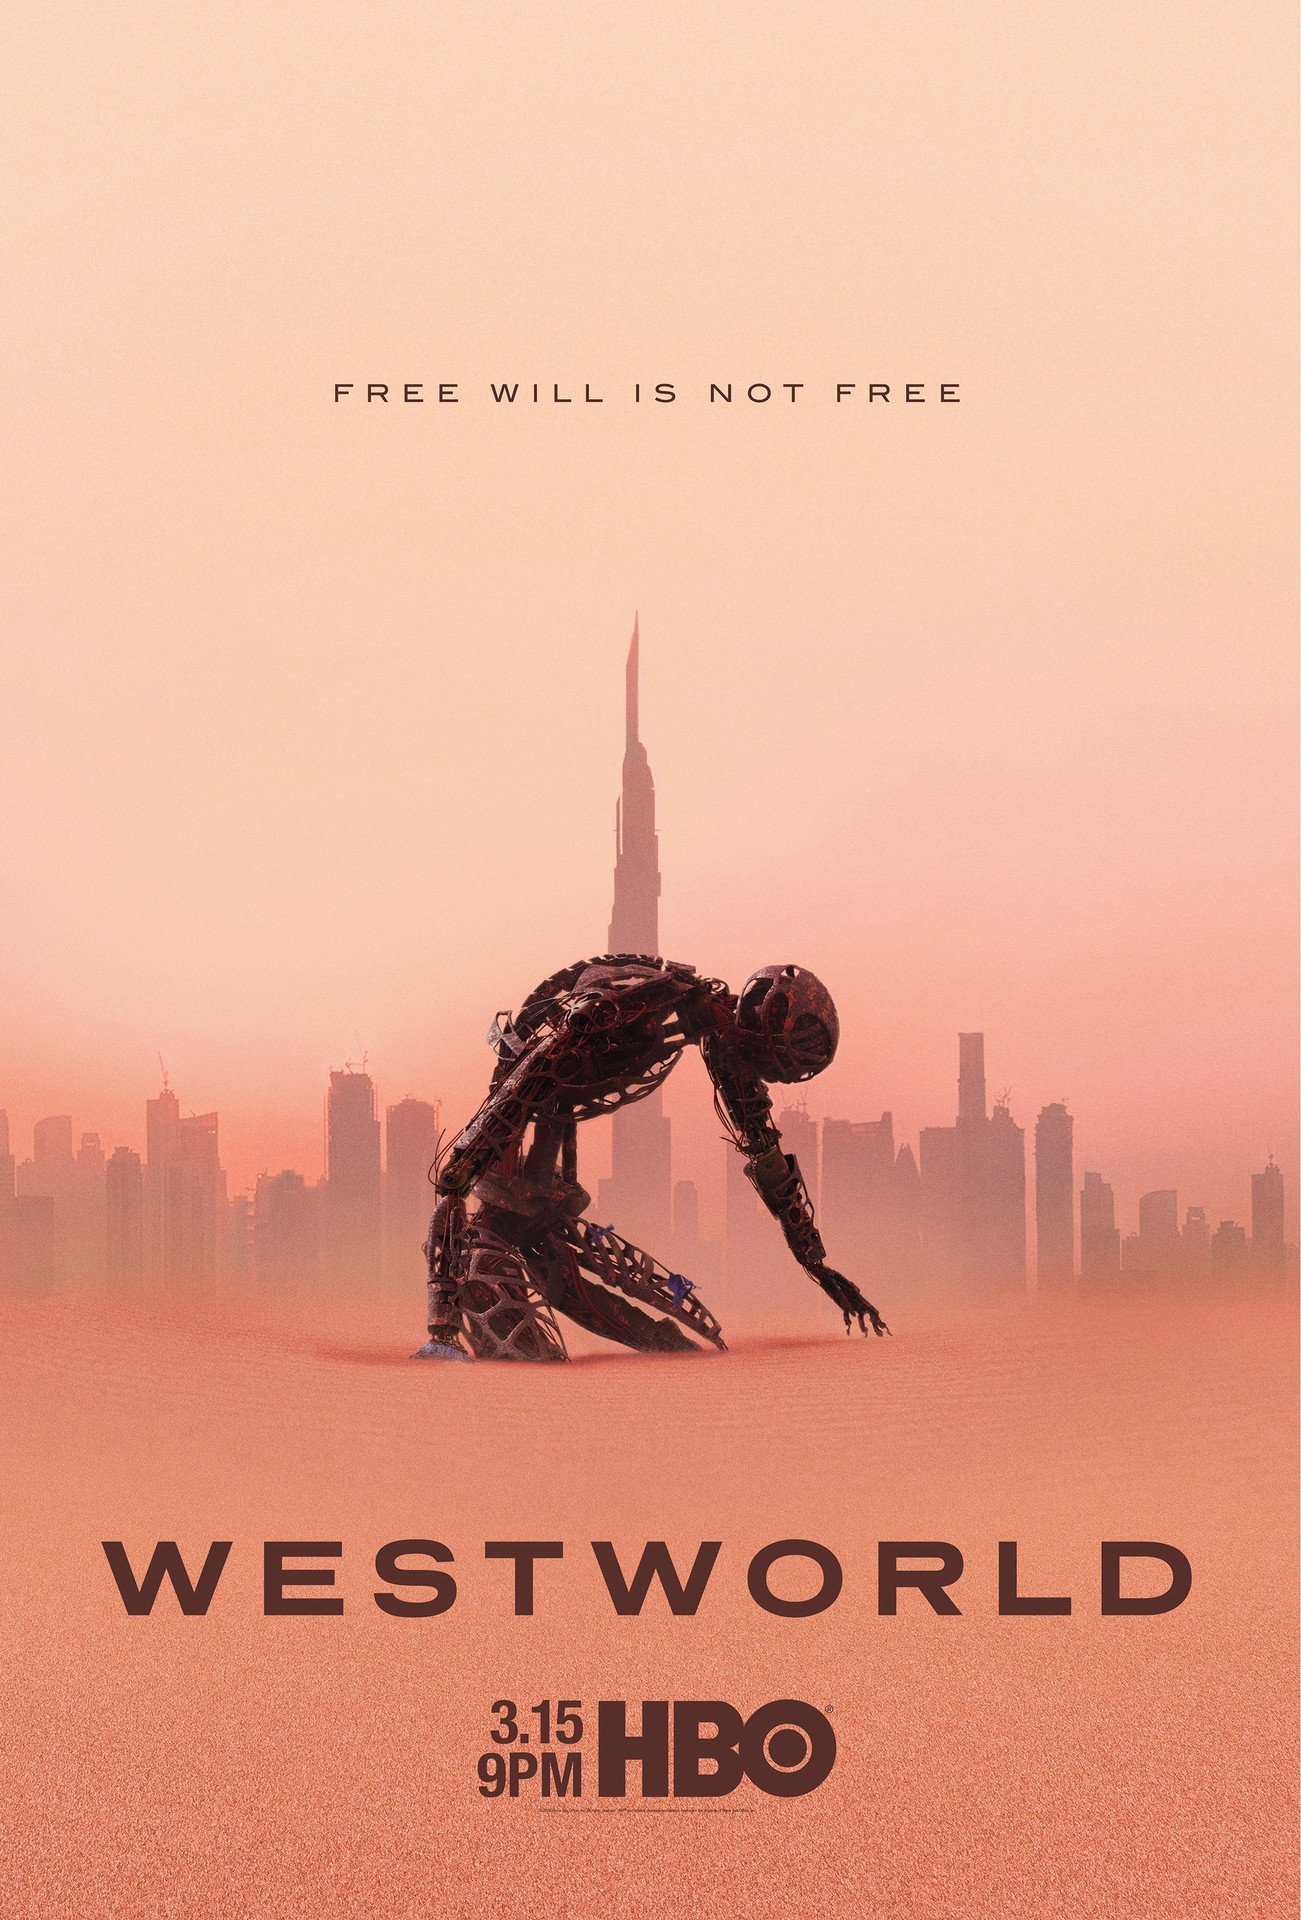 Westworld Gets Renewed for Season 4 at HBO TheNationRoar